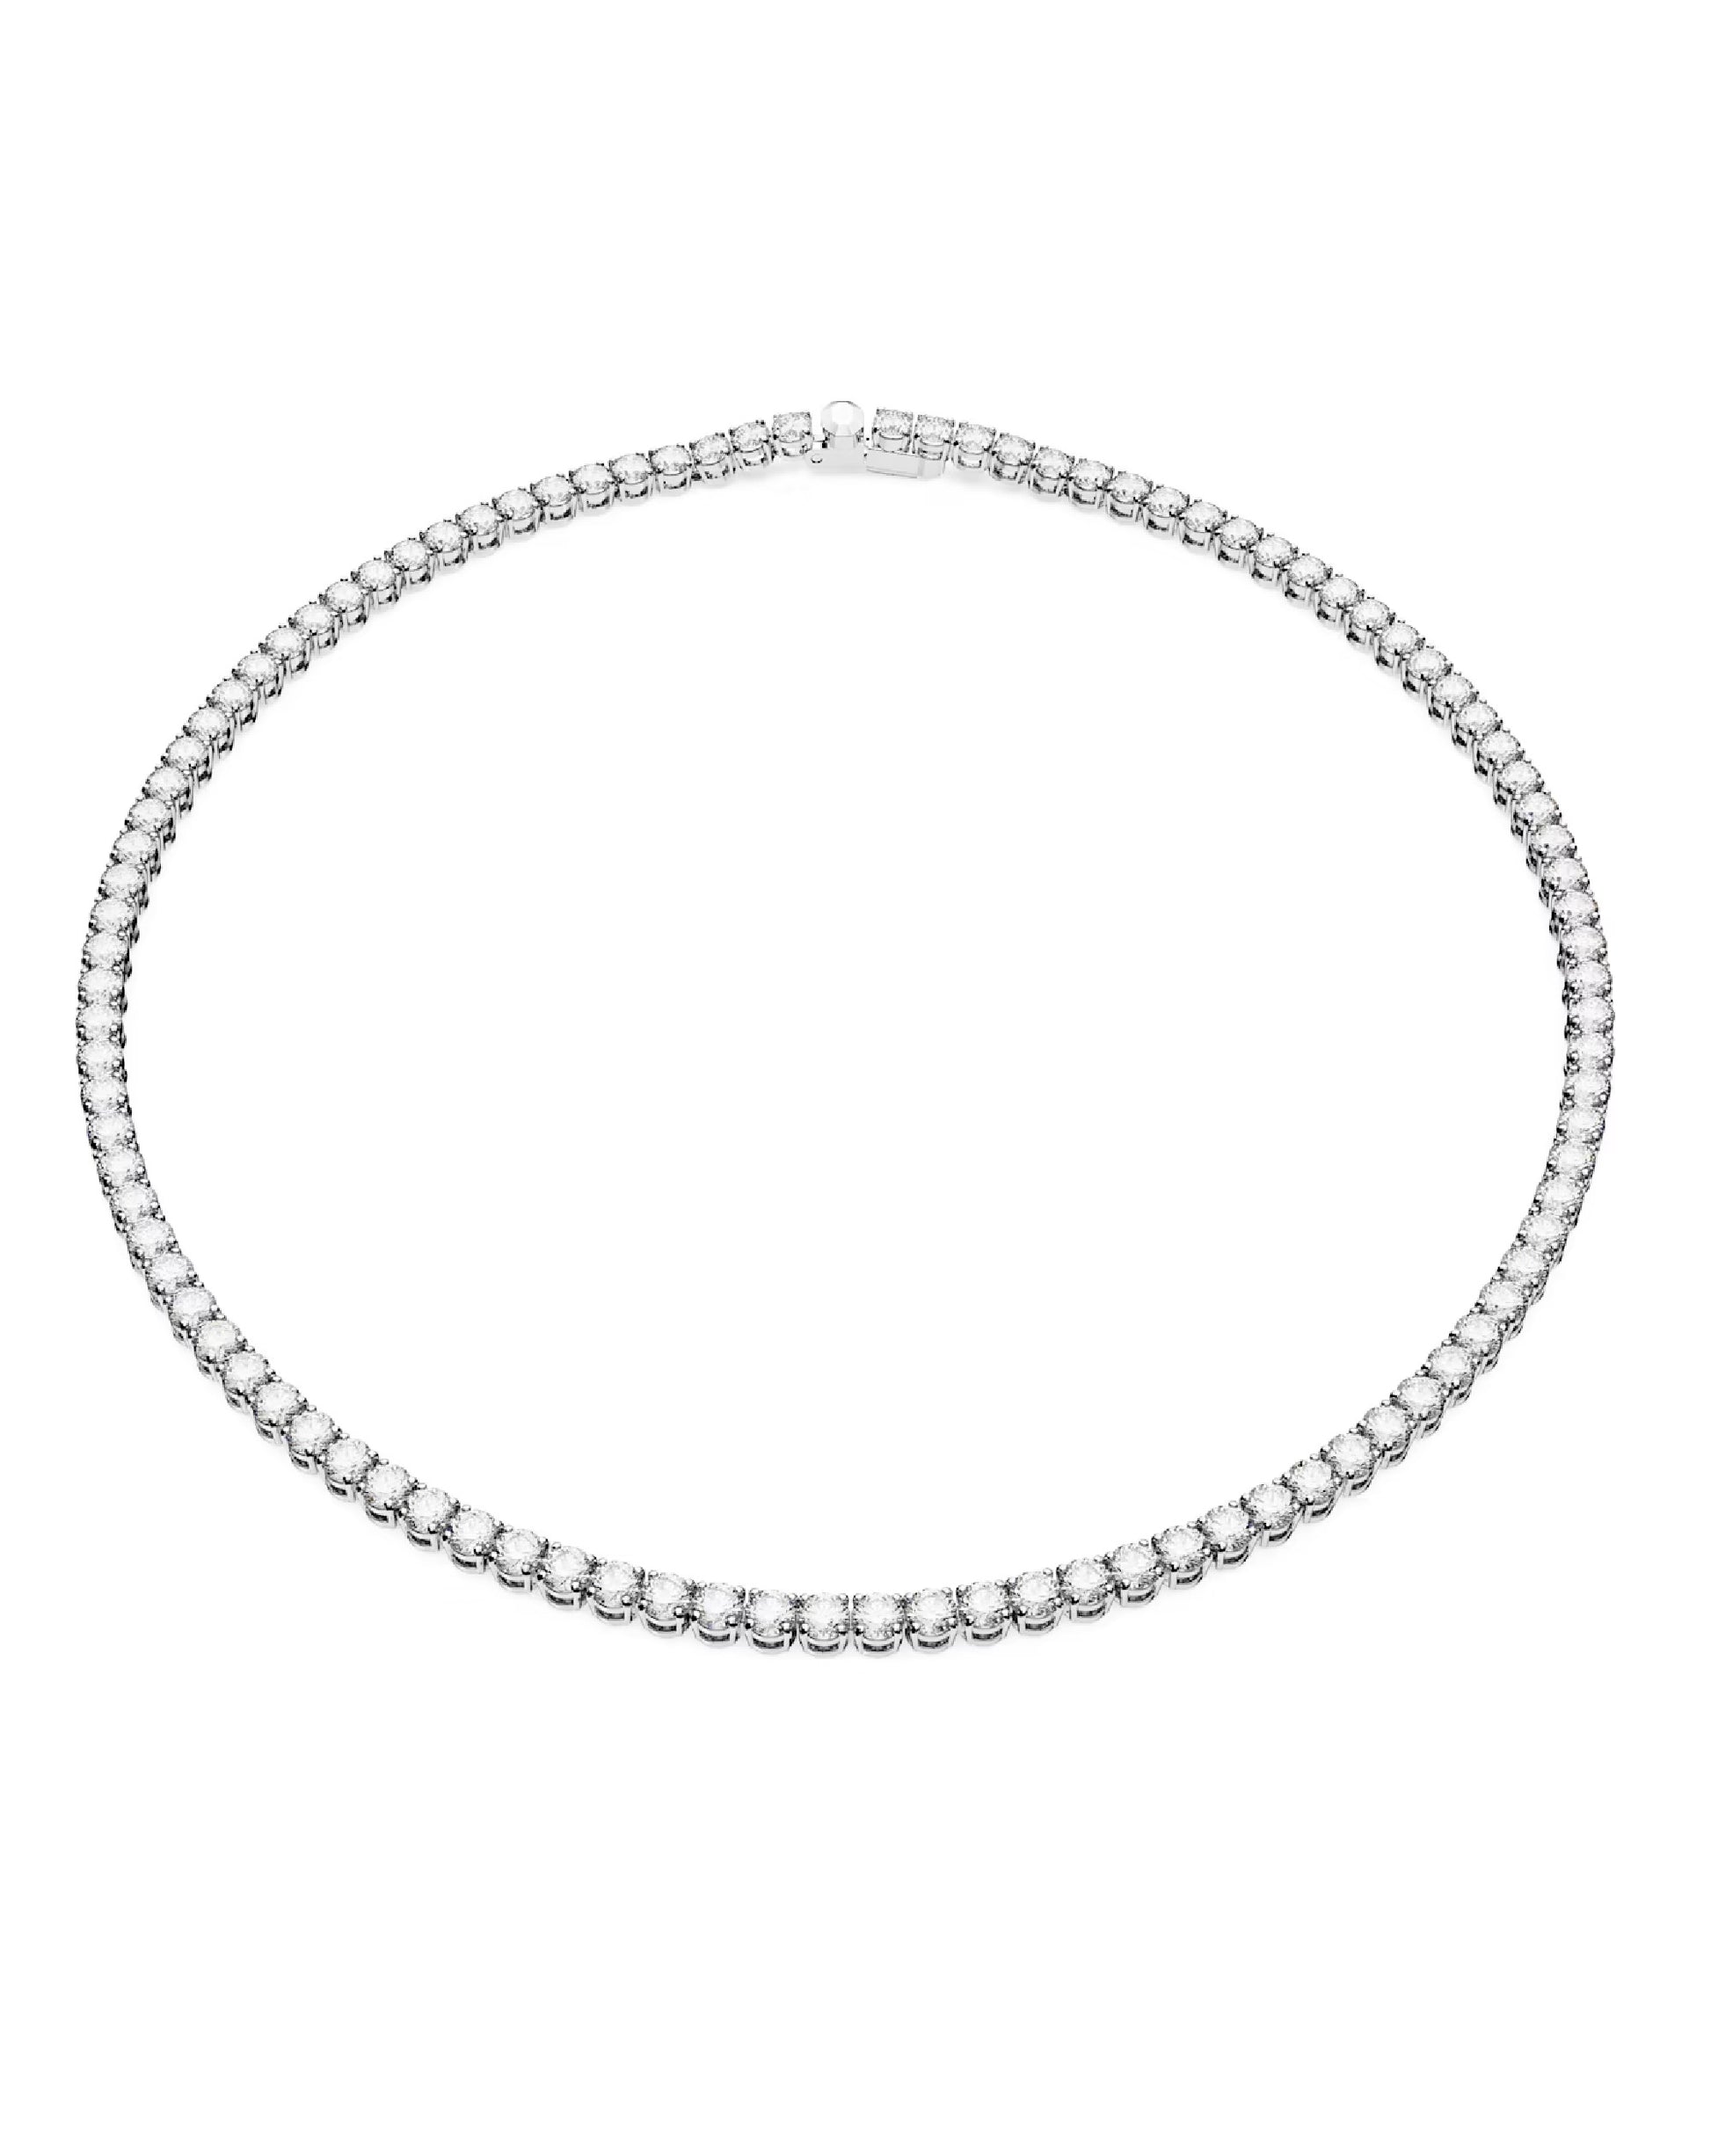 Swarovski 5681801 Swarovski Matrix TENNIS Necklace, L size Rhodium PLATED Necklaces